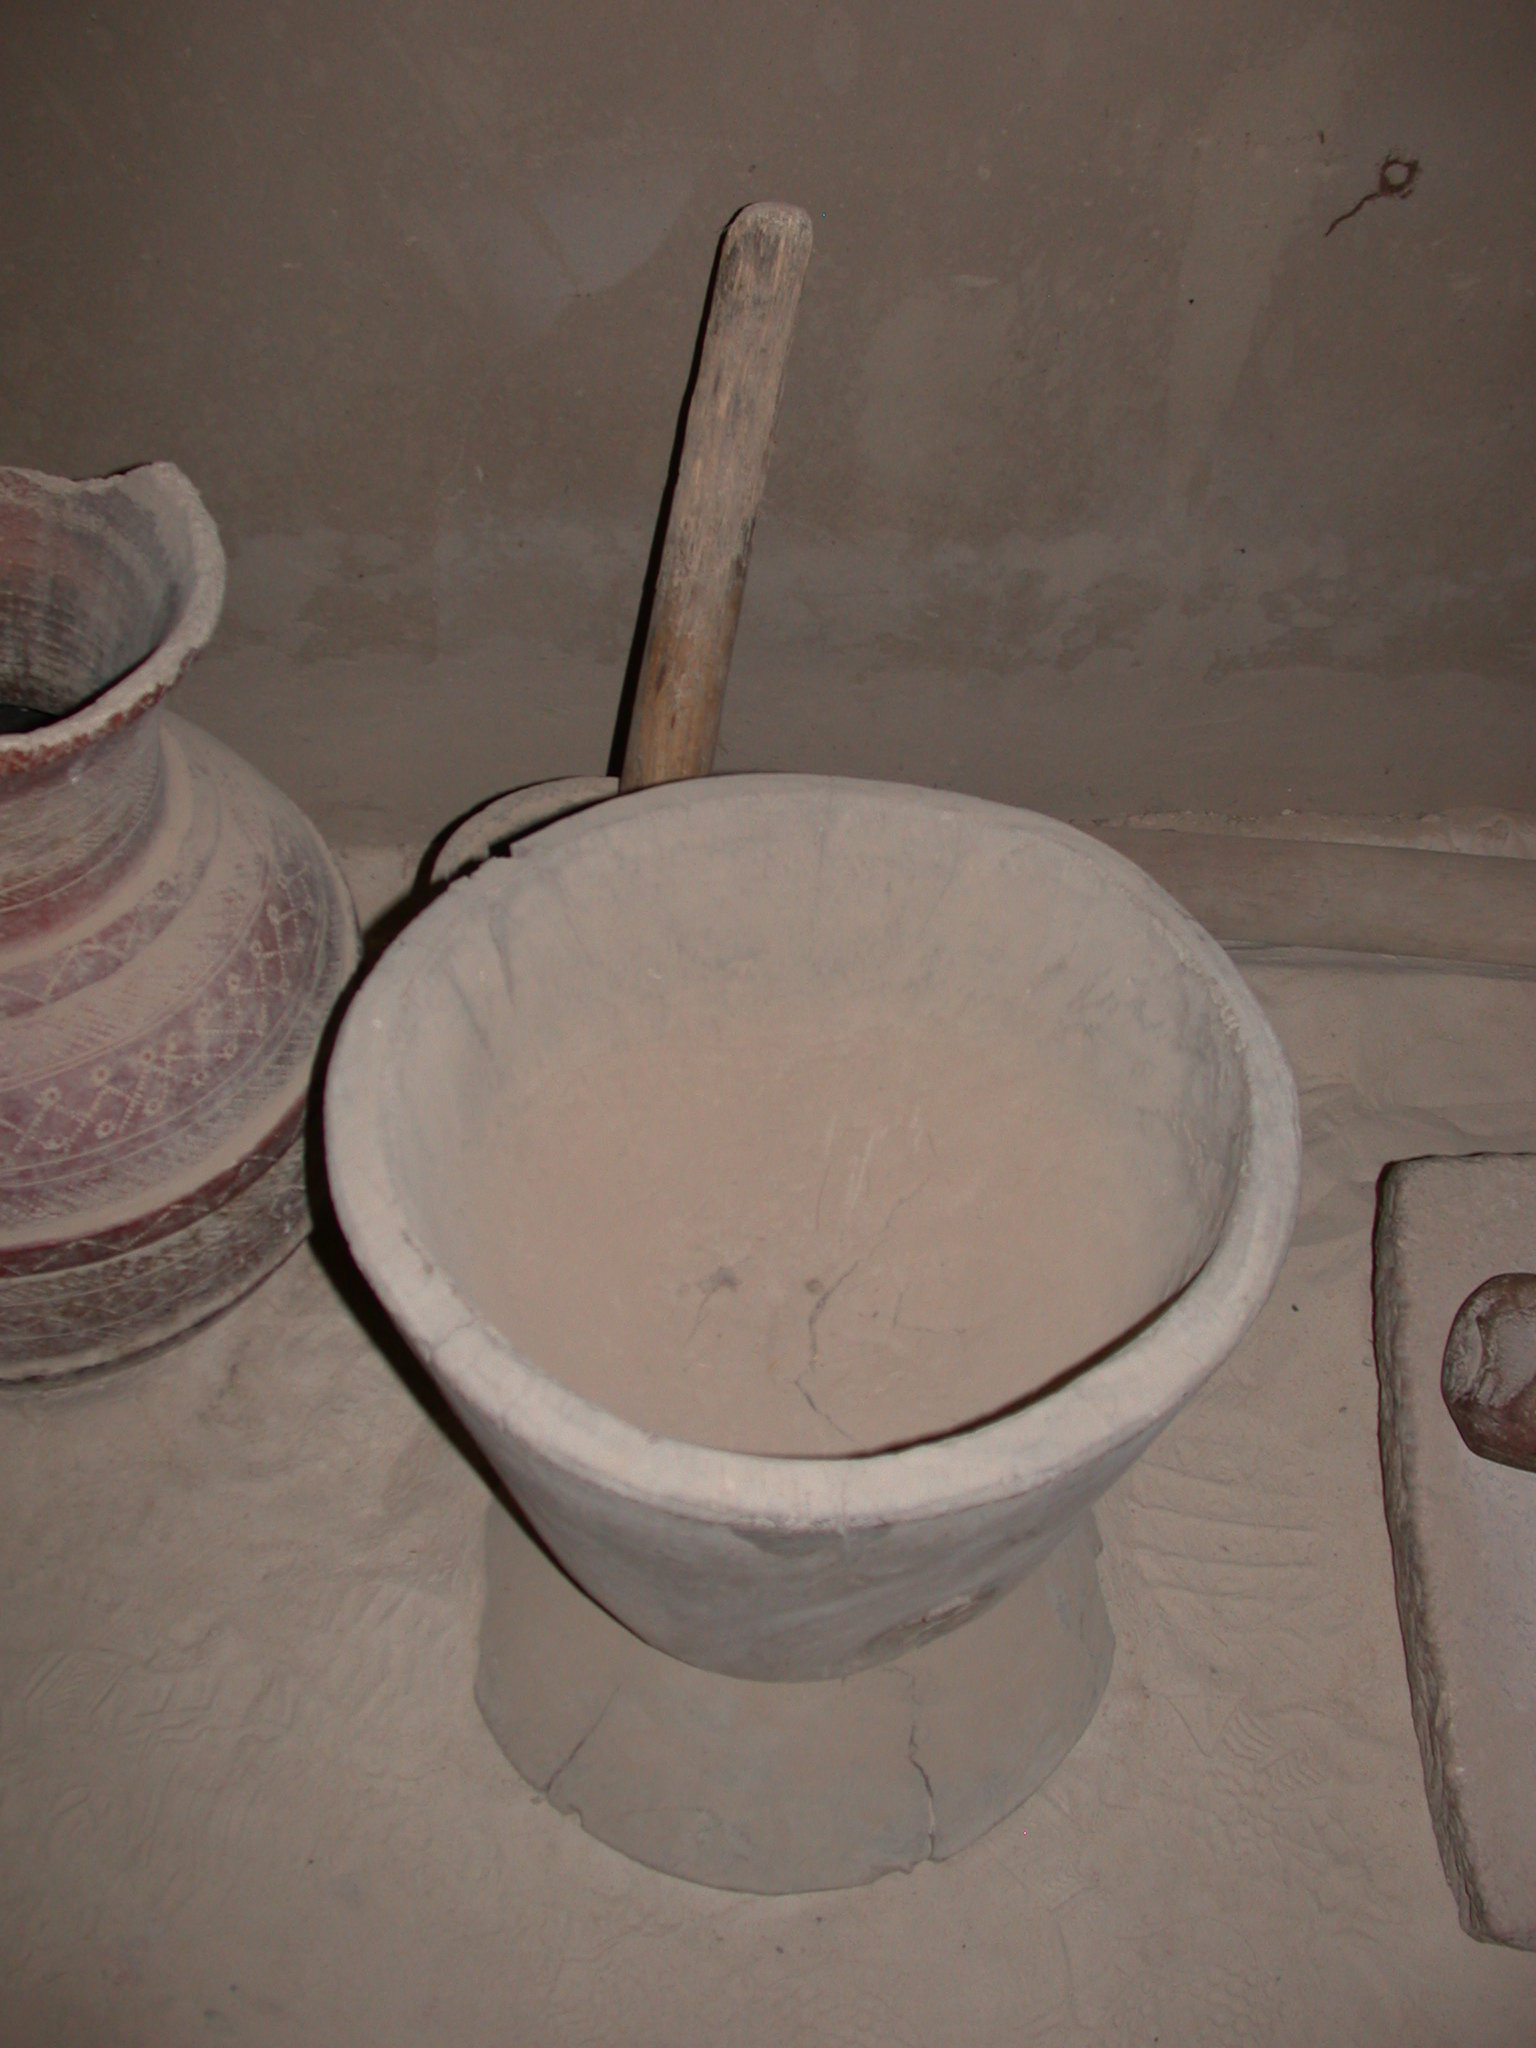 Mortars and Pestle, Timbuktu Ethnological Museum, Timbuktu, Mali